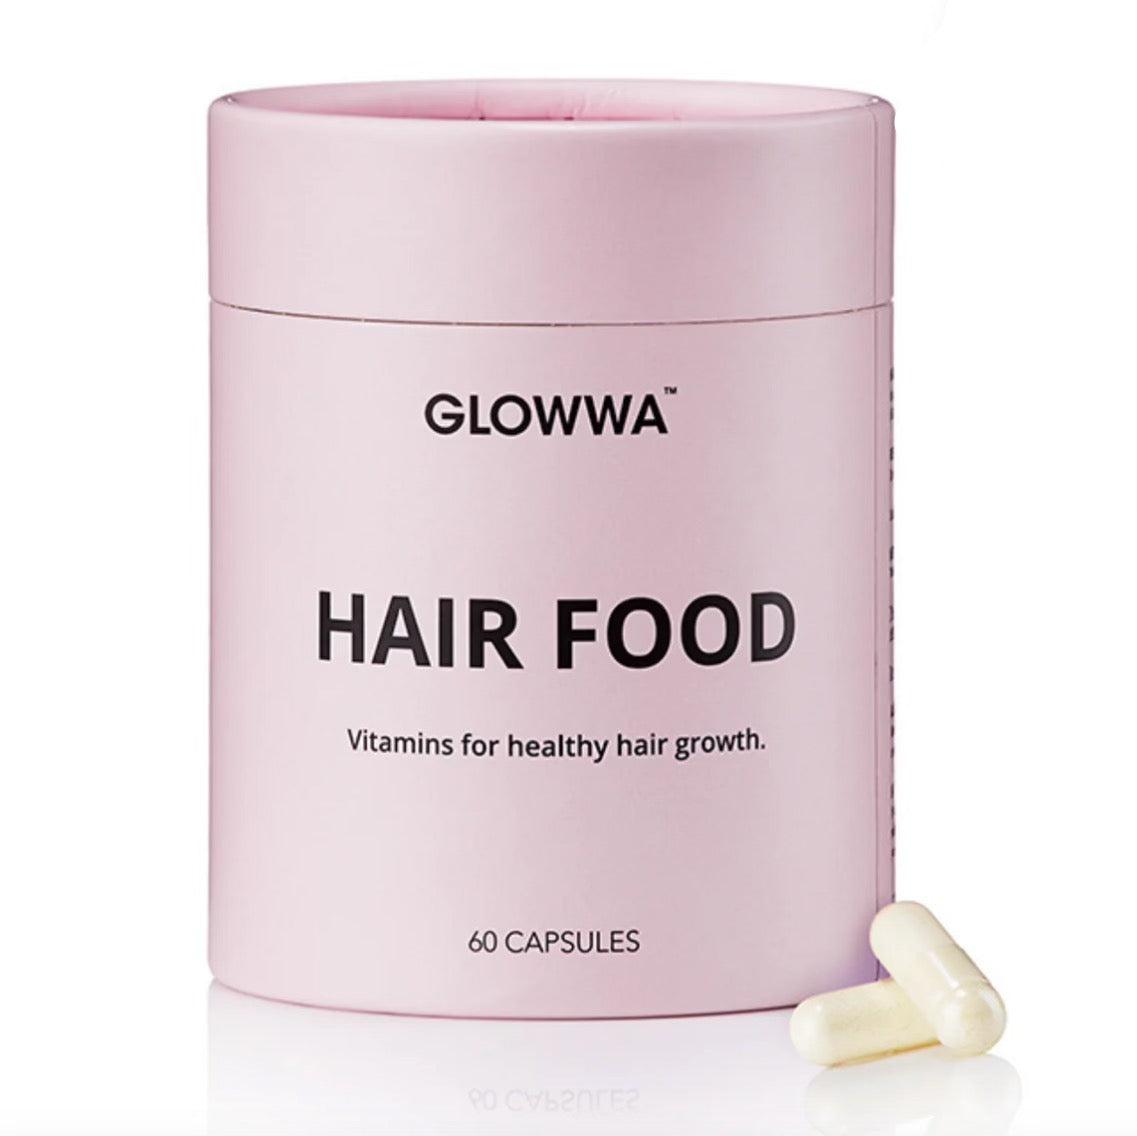 Glowwa Hair Food 3 months supply 180 capsules